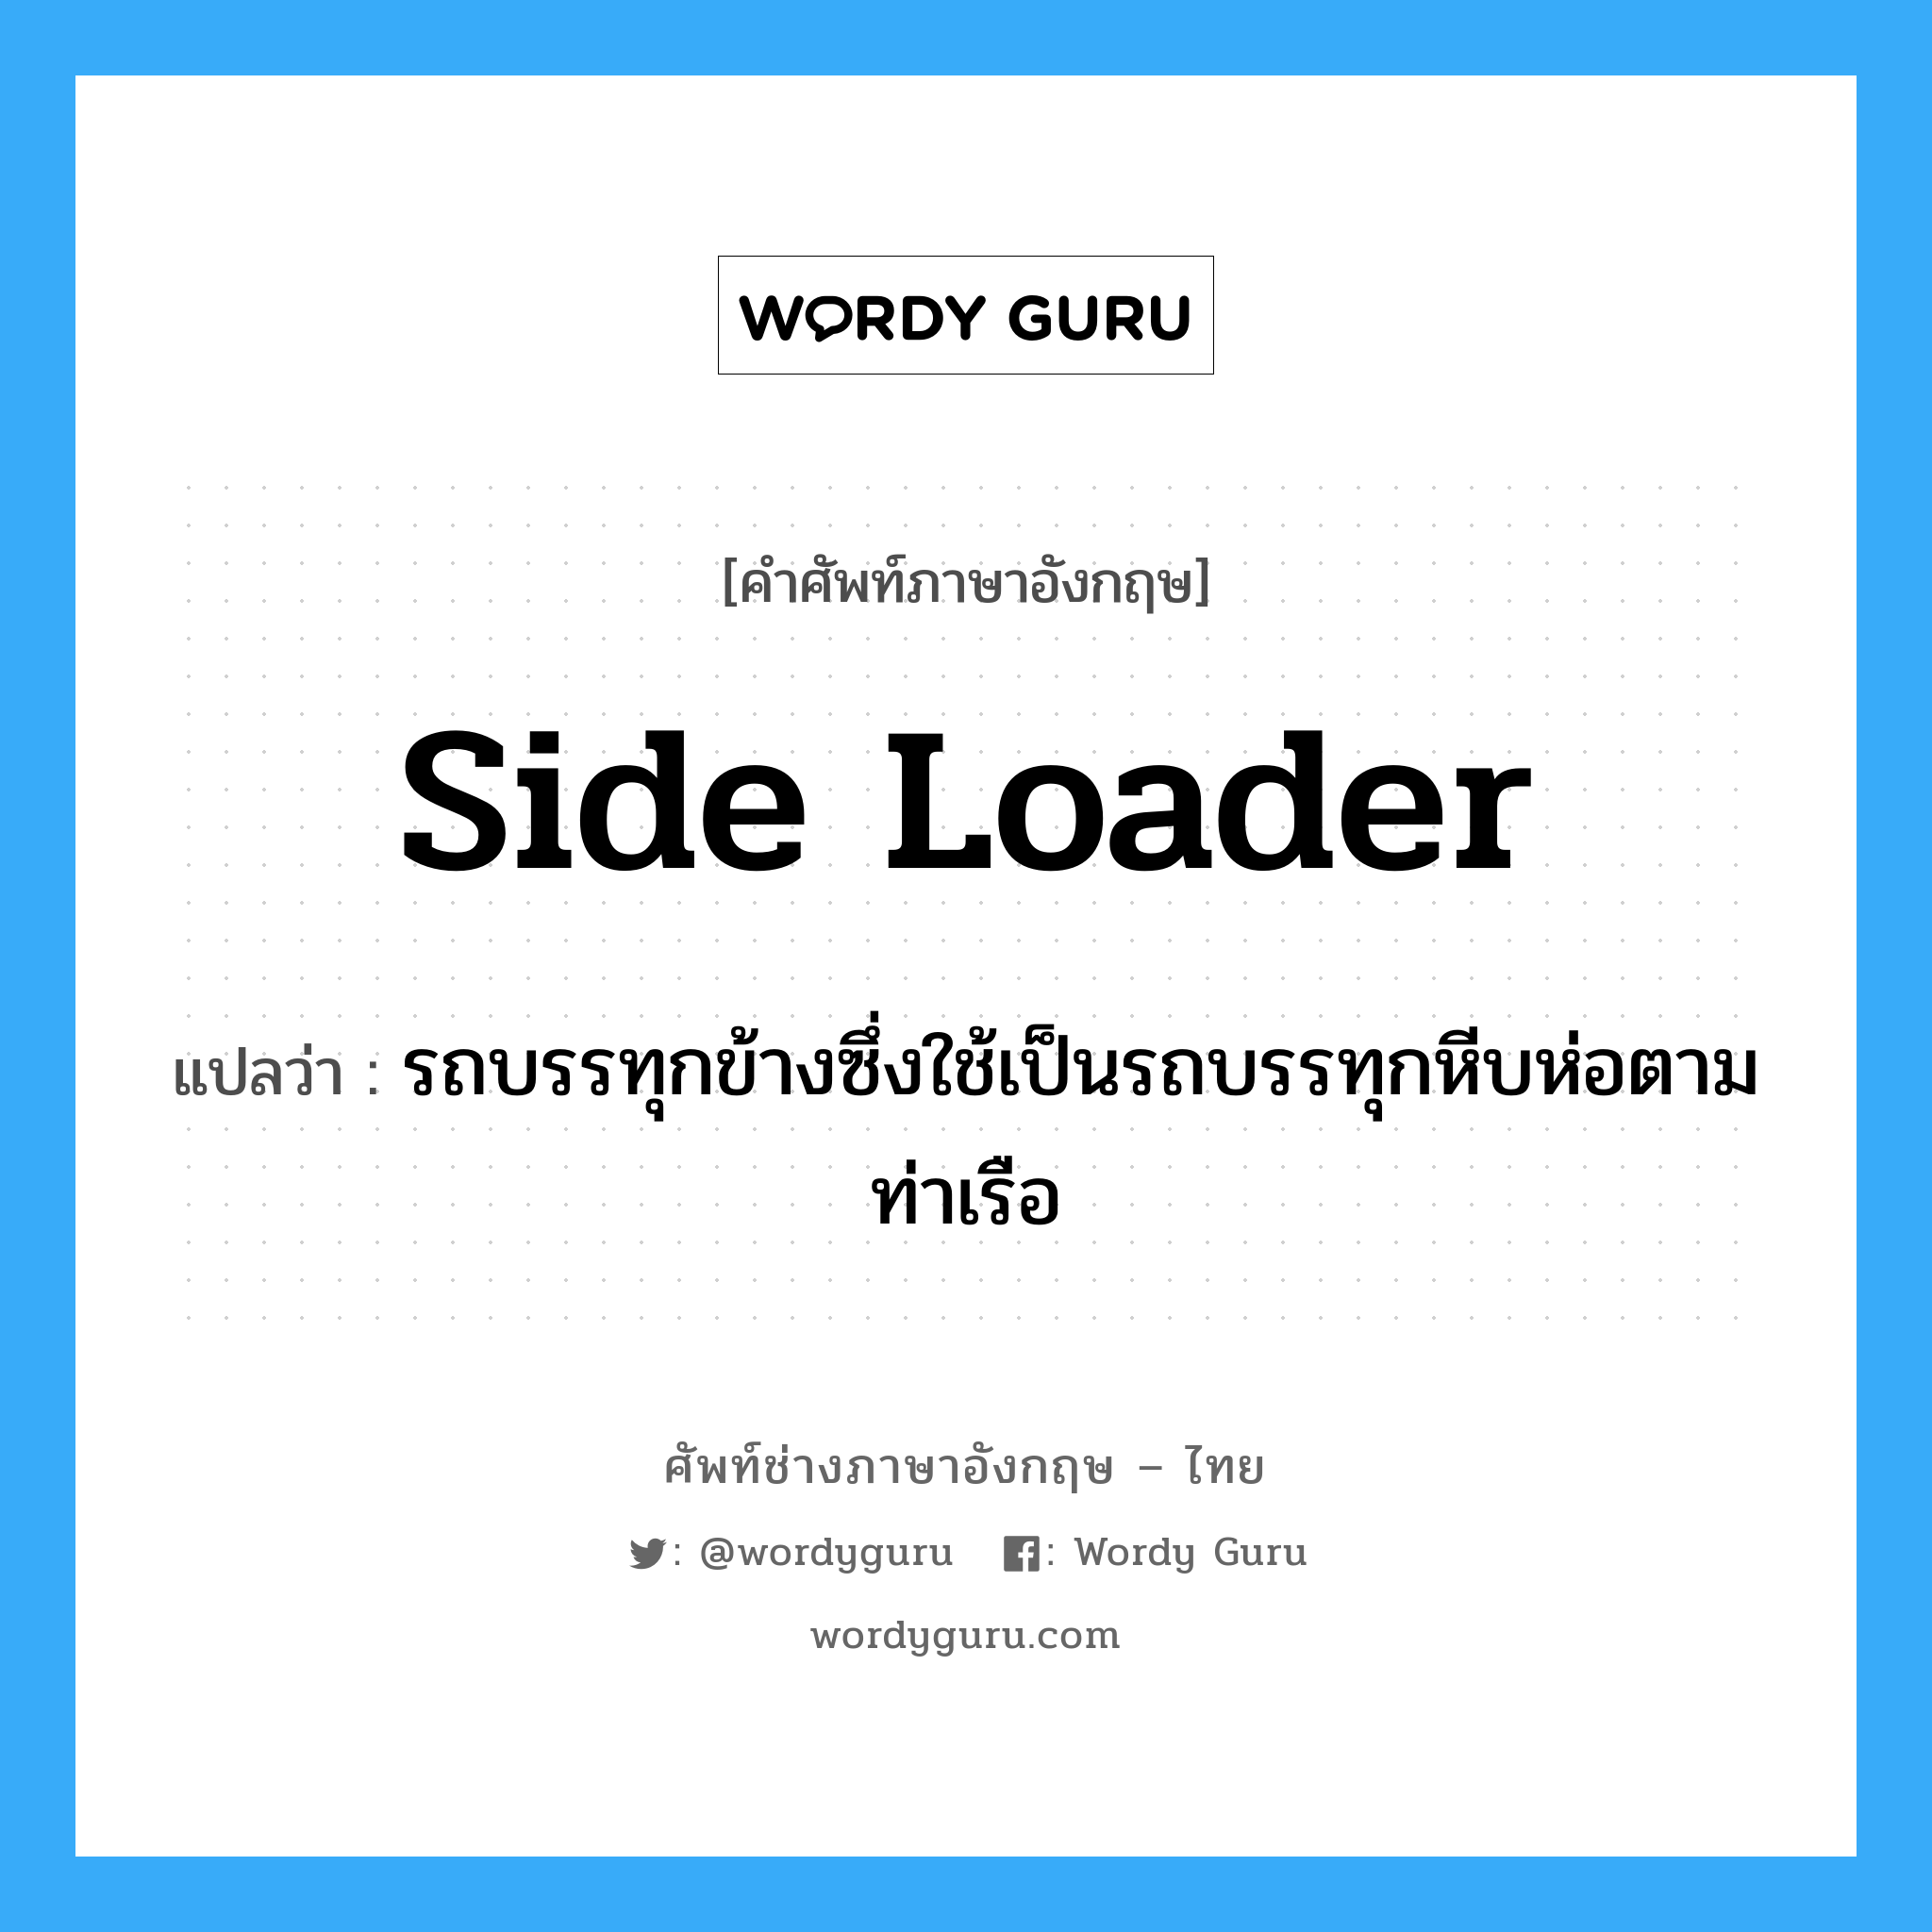 side loader แปลว่า?, คำศัพท์ช่างภาษาอังกฤษ - ไทย side loader คำศัพท์ภาษาอังกฤษ side loader แปลว่า รถบรรทุกข้างซึ่งใช้เป็นรถบรรทุกหีบห่อตามท่าเรือ